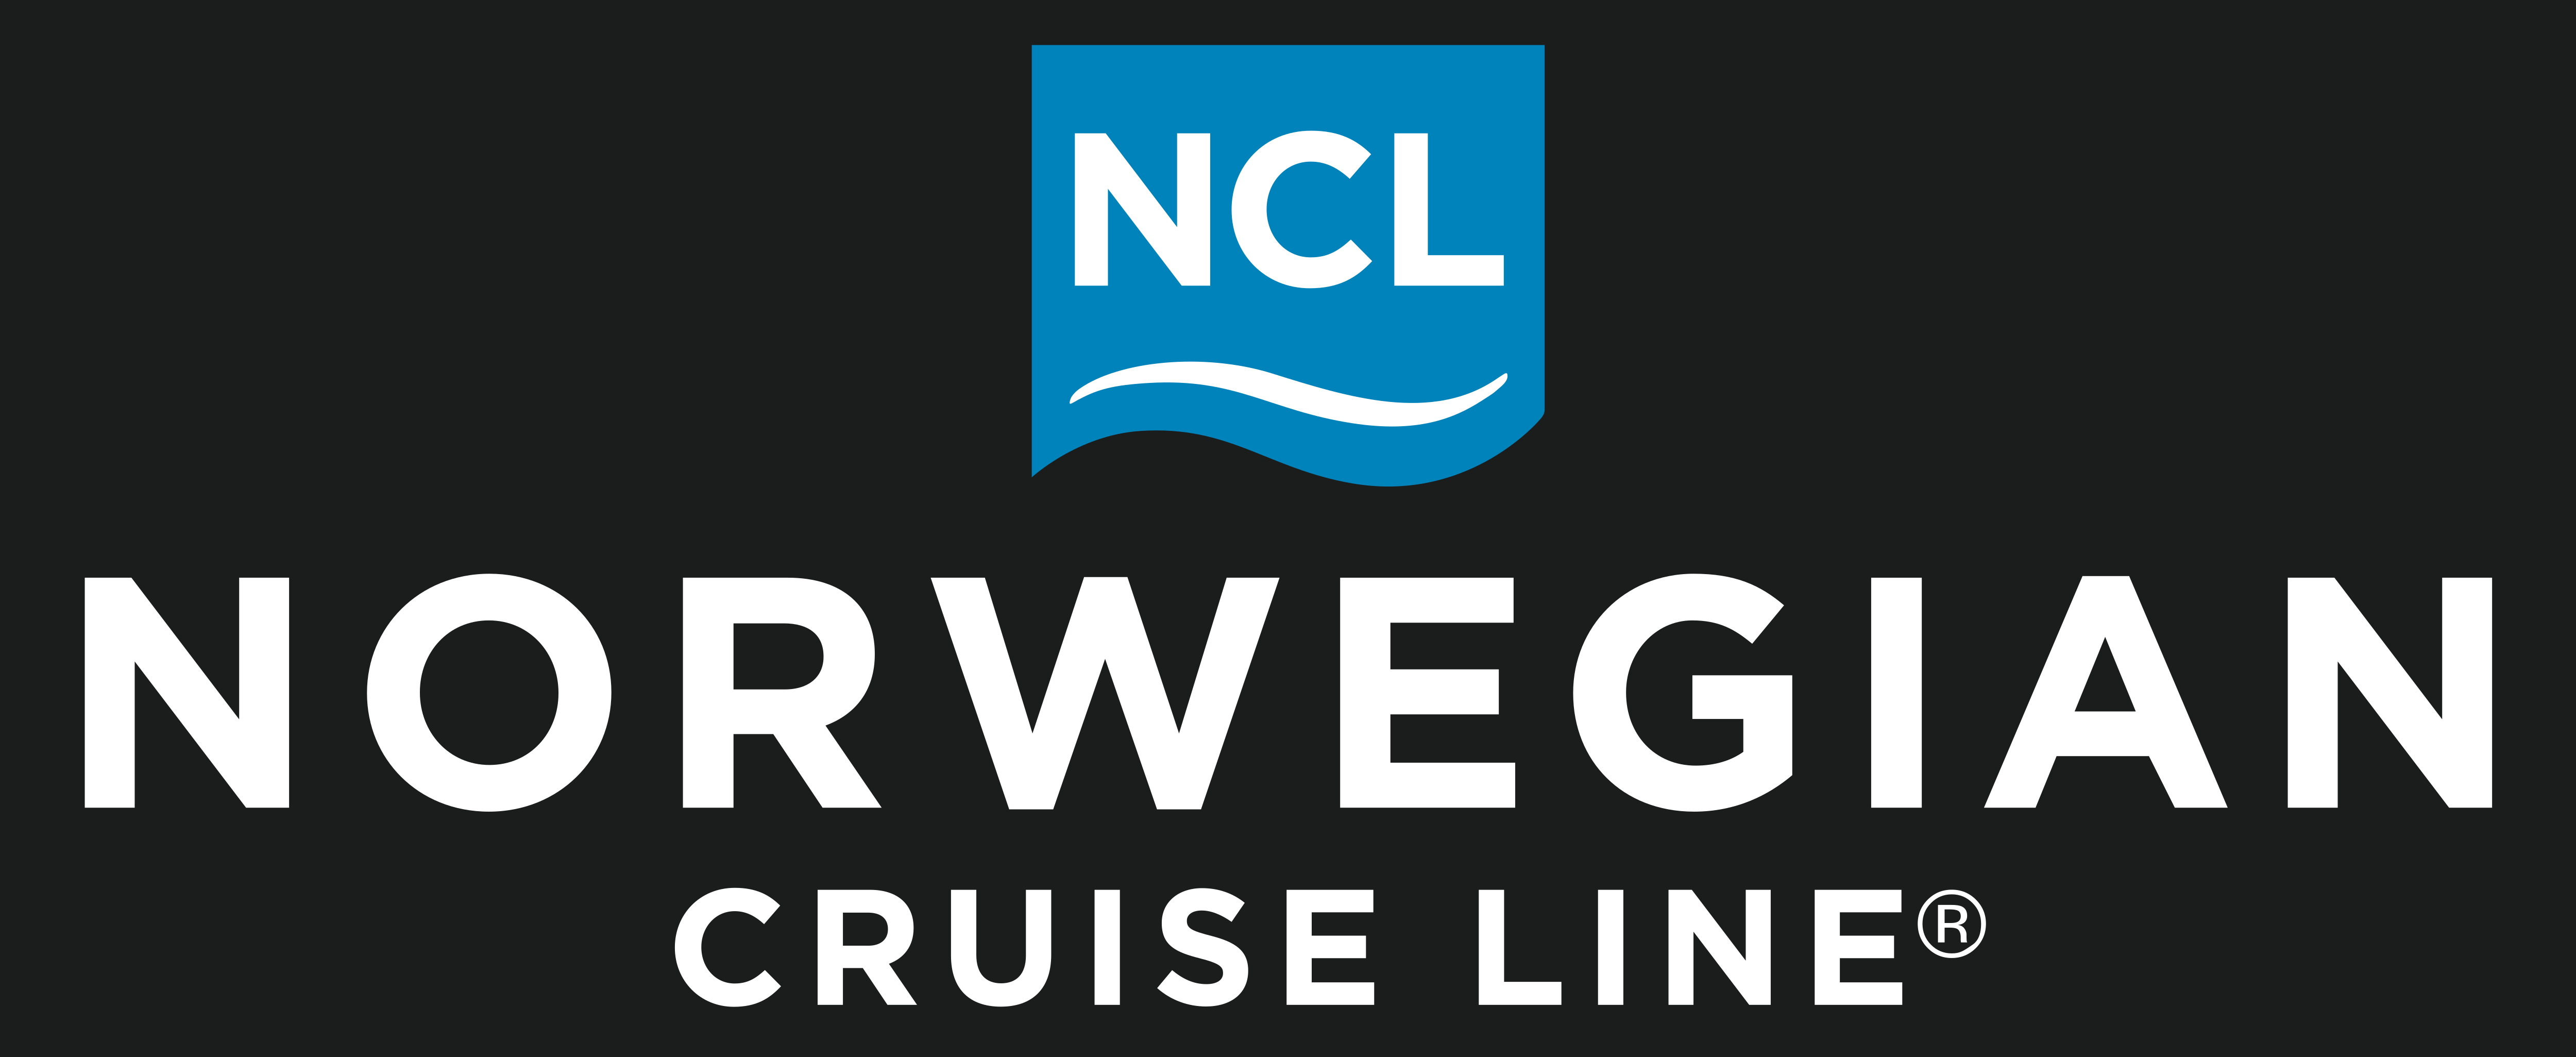 cruise line company dan word